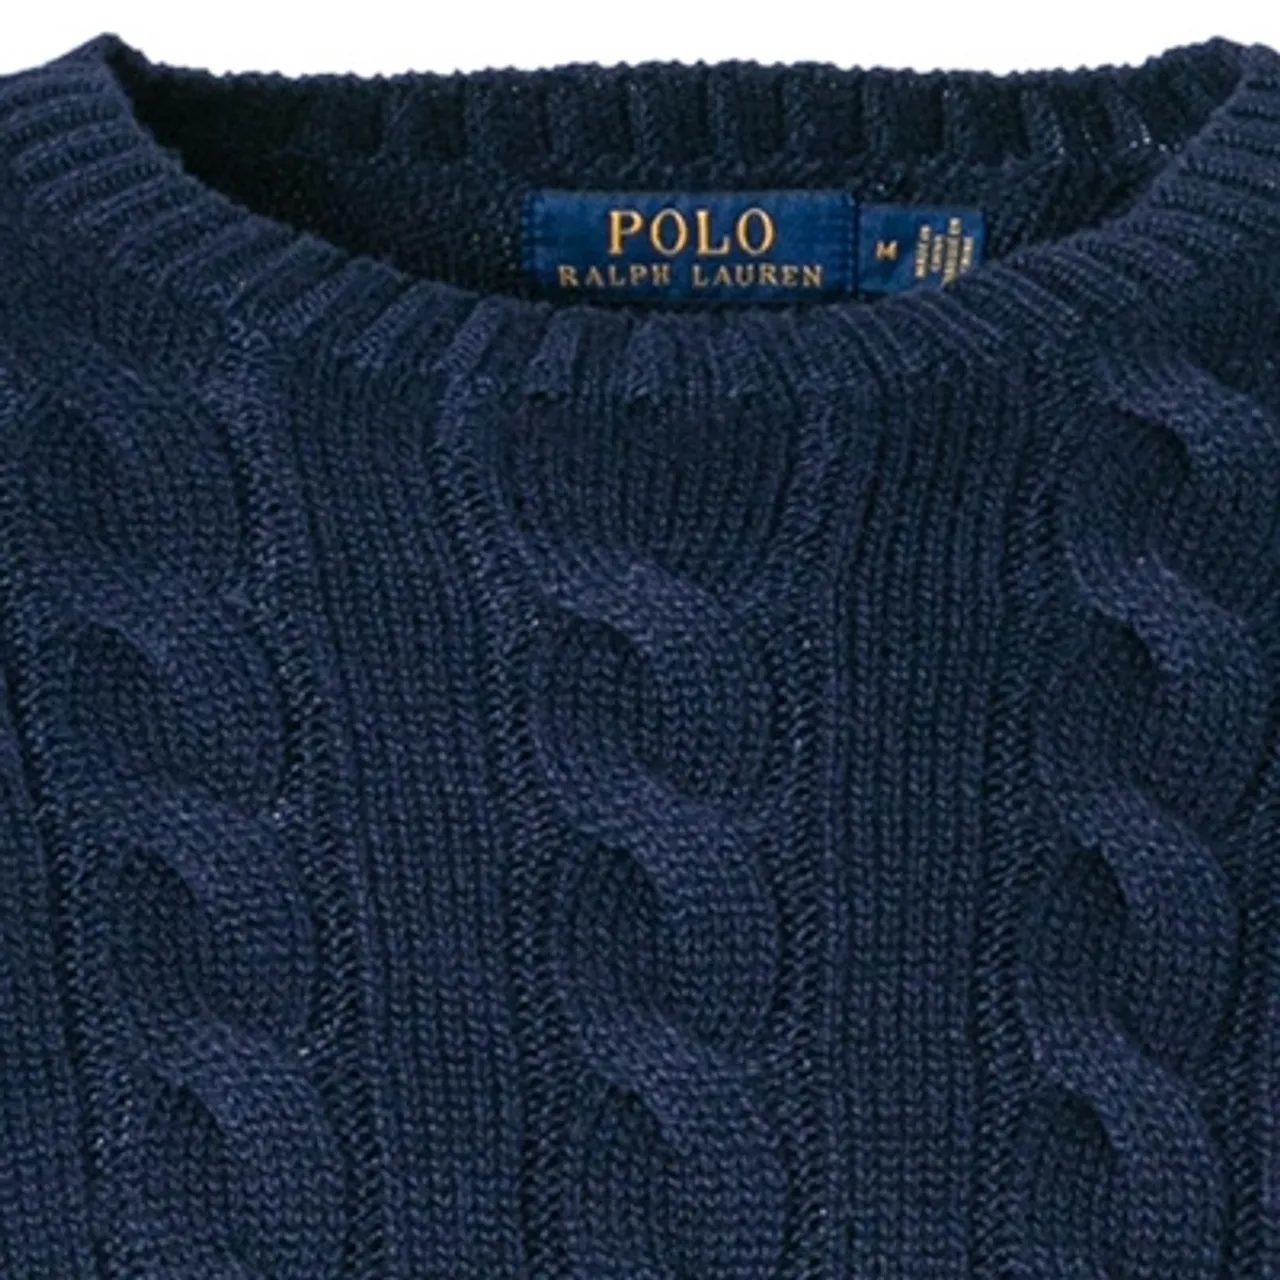 Polo Ralph Lauren Herren Pullover blau Baumwolle unifarben